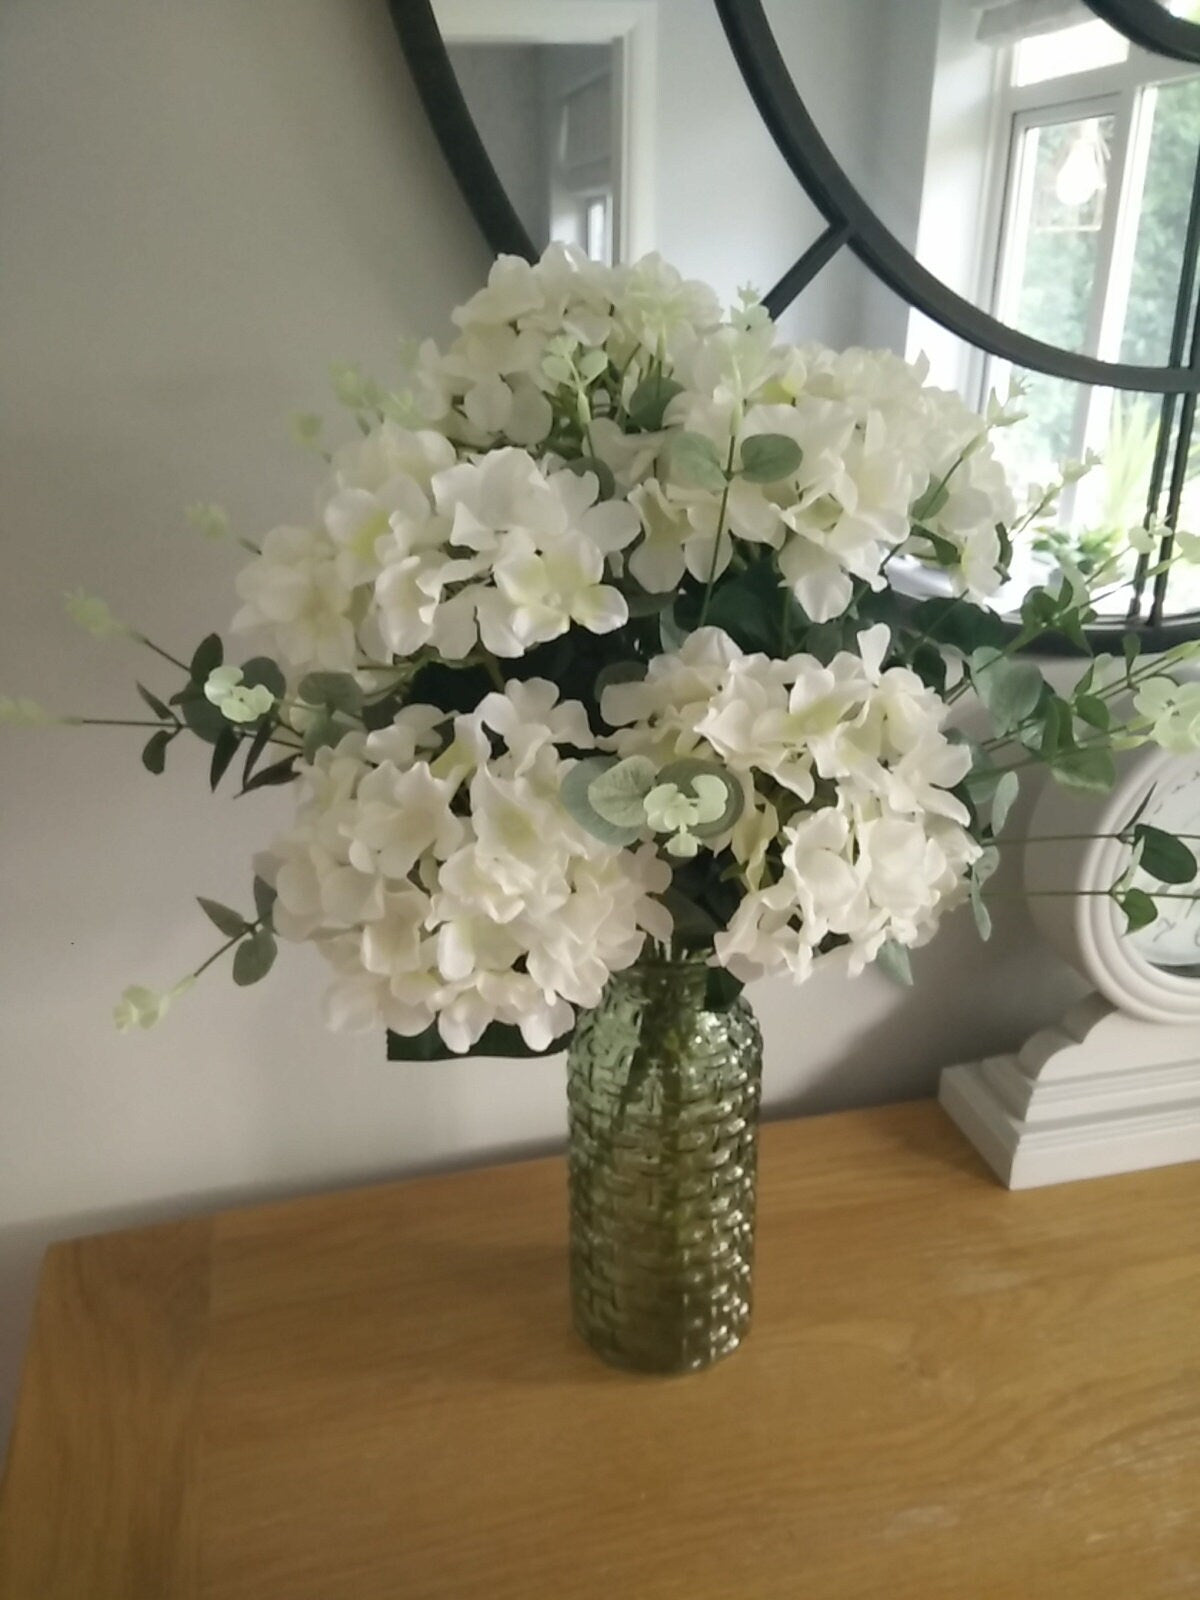 Hydrangea and Eucalyptus Silk Flower Arrangement With A Green Glass Vase